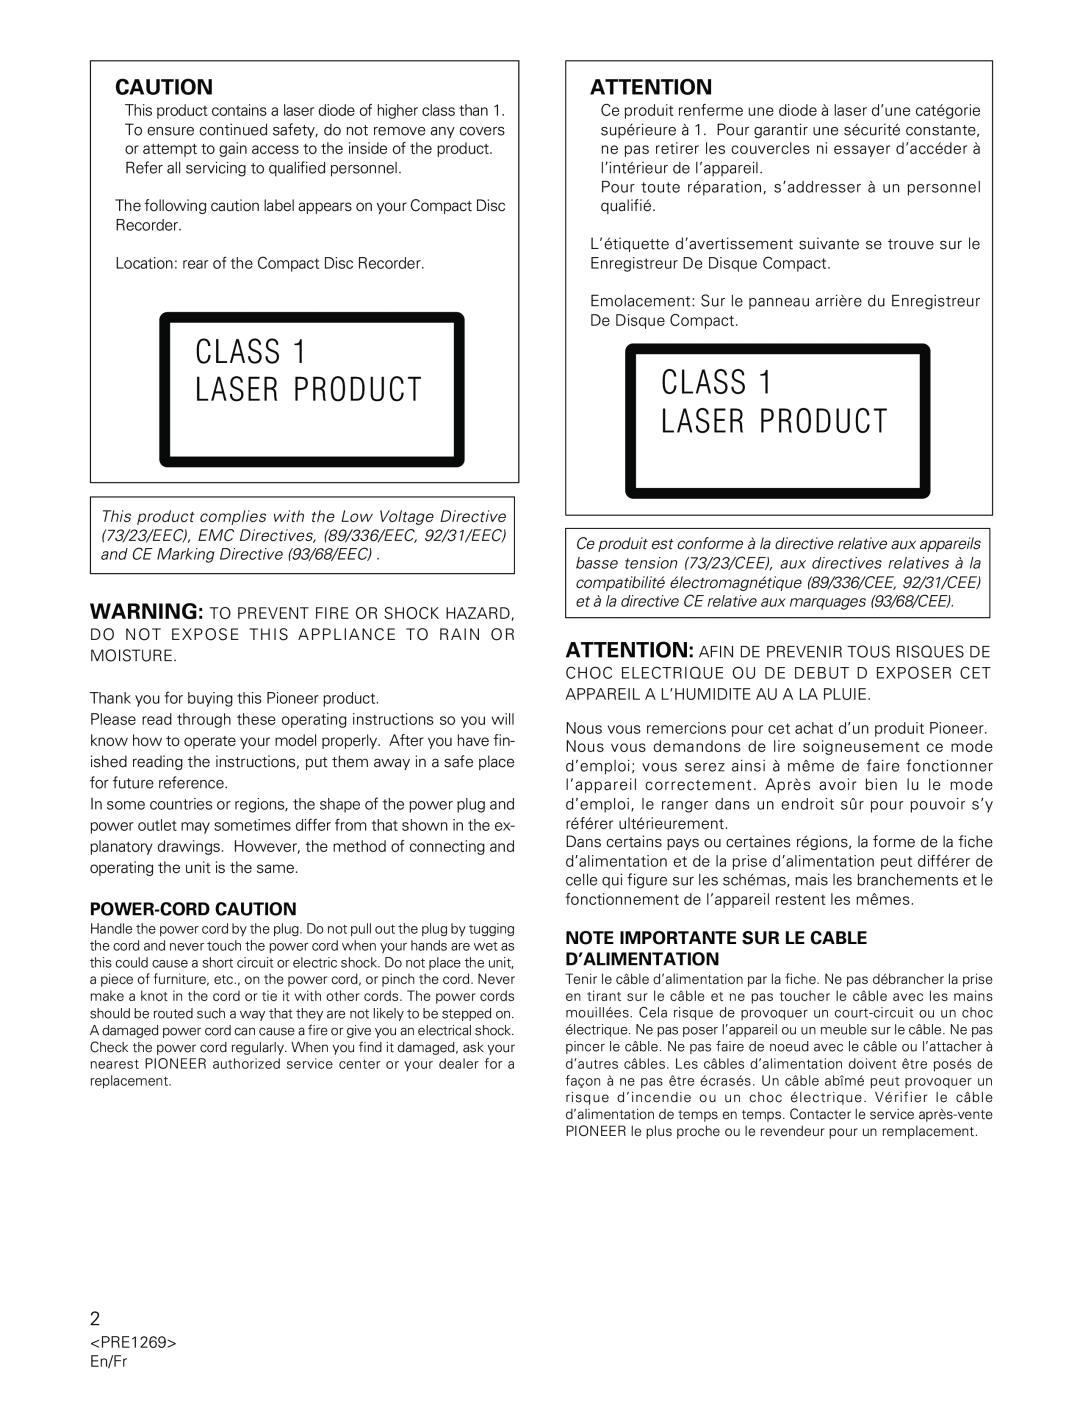 Pioneer PDR-555RW Class Laser Product, Power-Cordcaution, Note Importante Sur Le Cable D’Alimentation 